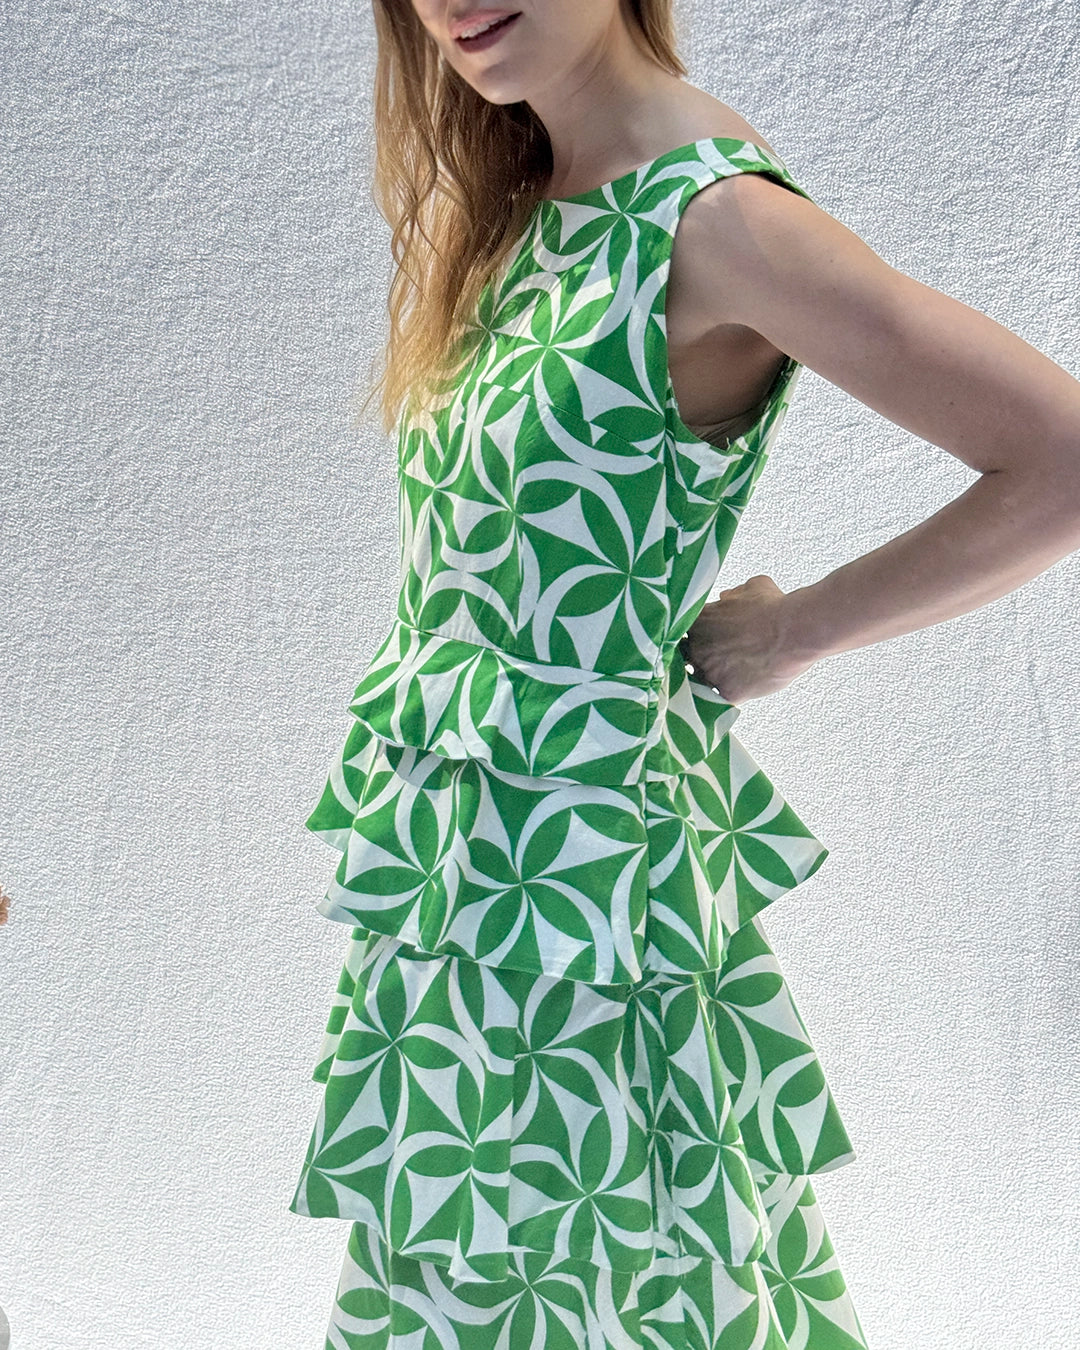 1960s-Style Mod Print Sheath Dress With Tiered Flounce Skirt